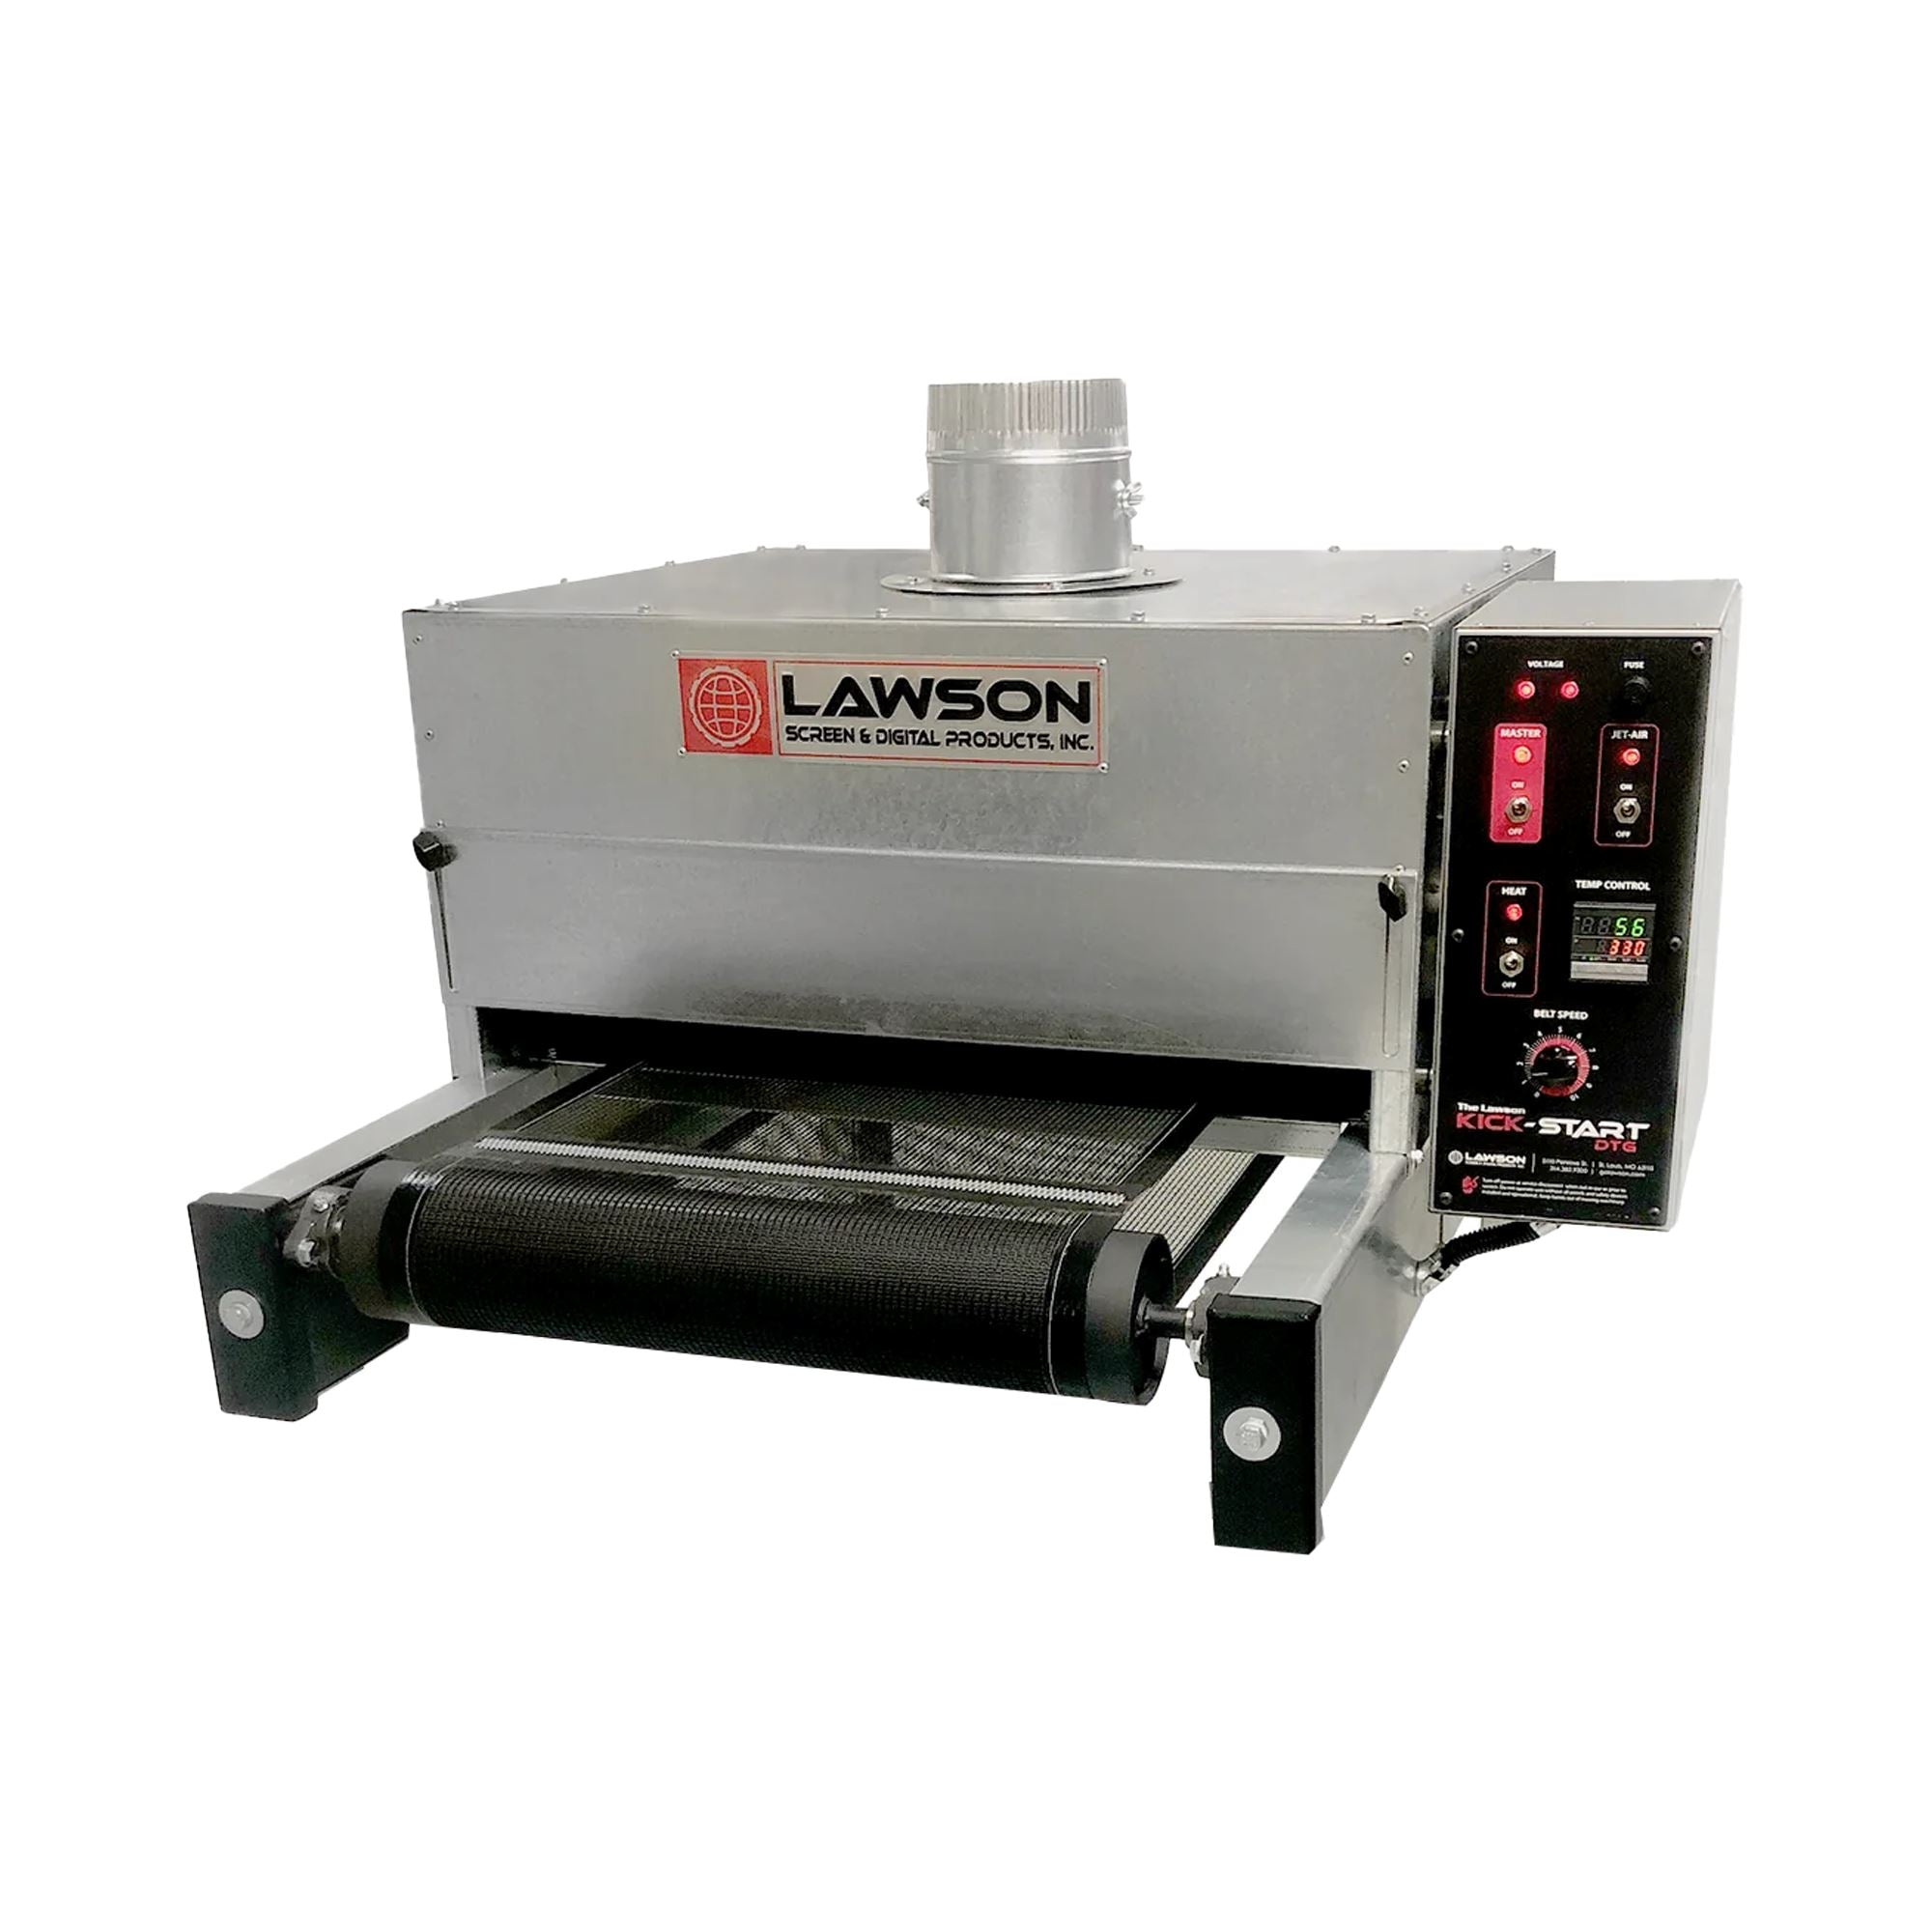 Lawson Large Clamshell Heat Press 16 x 20